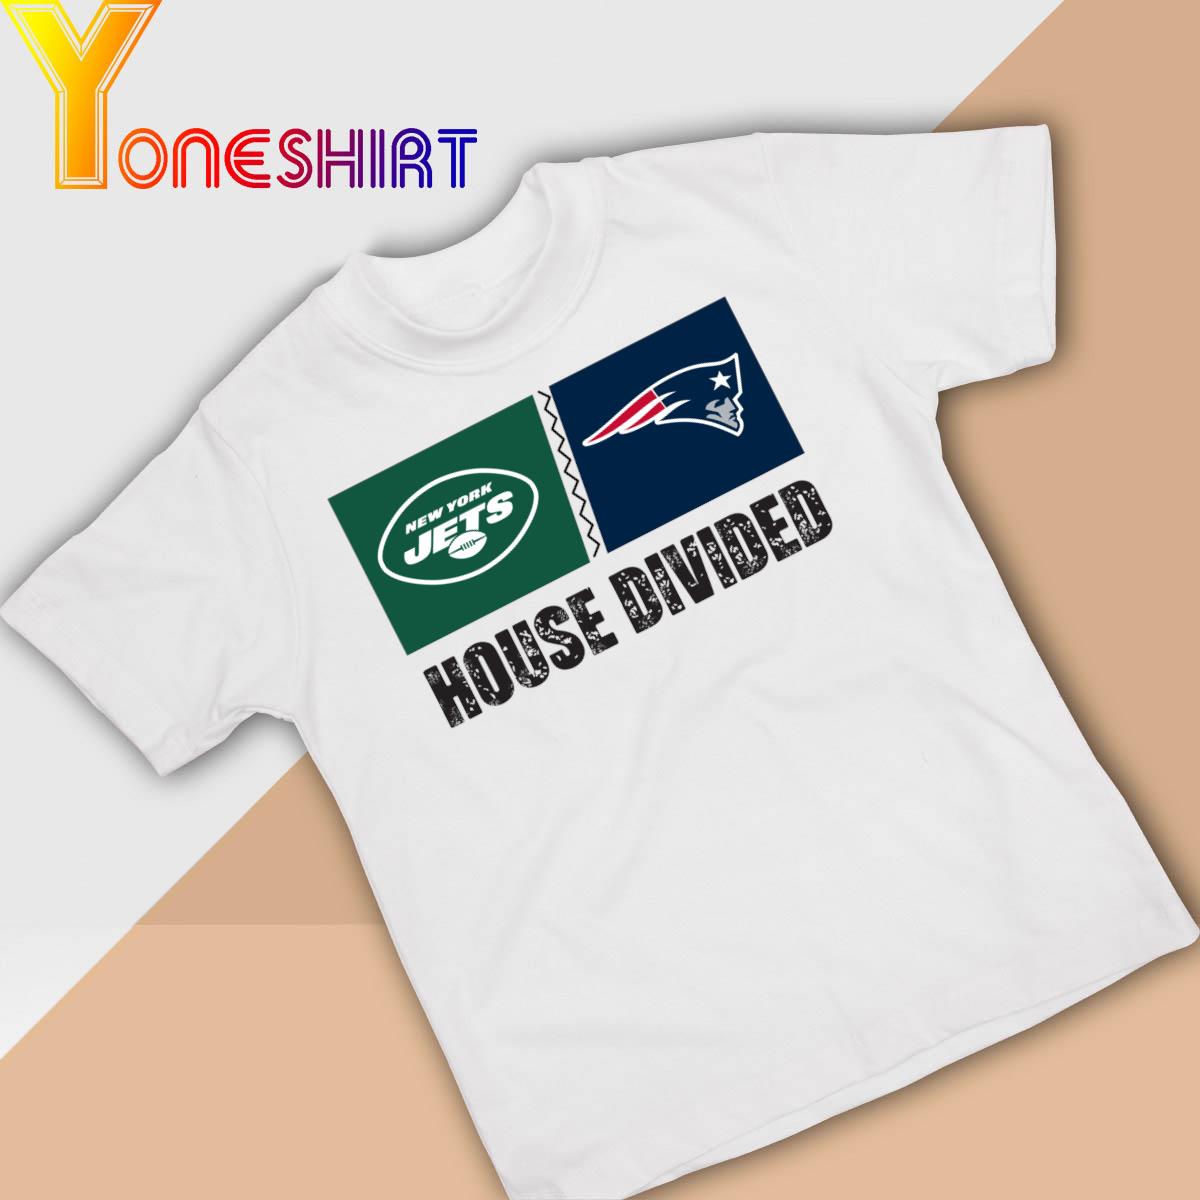 New York Jets vs New England Patriots House Divided shirt